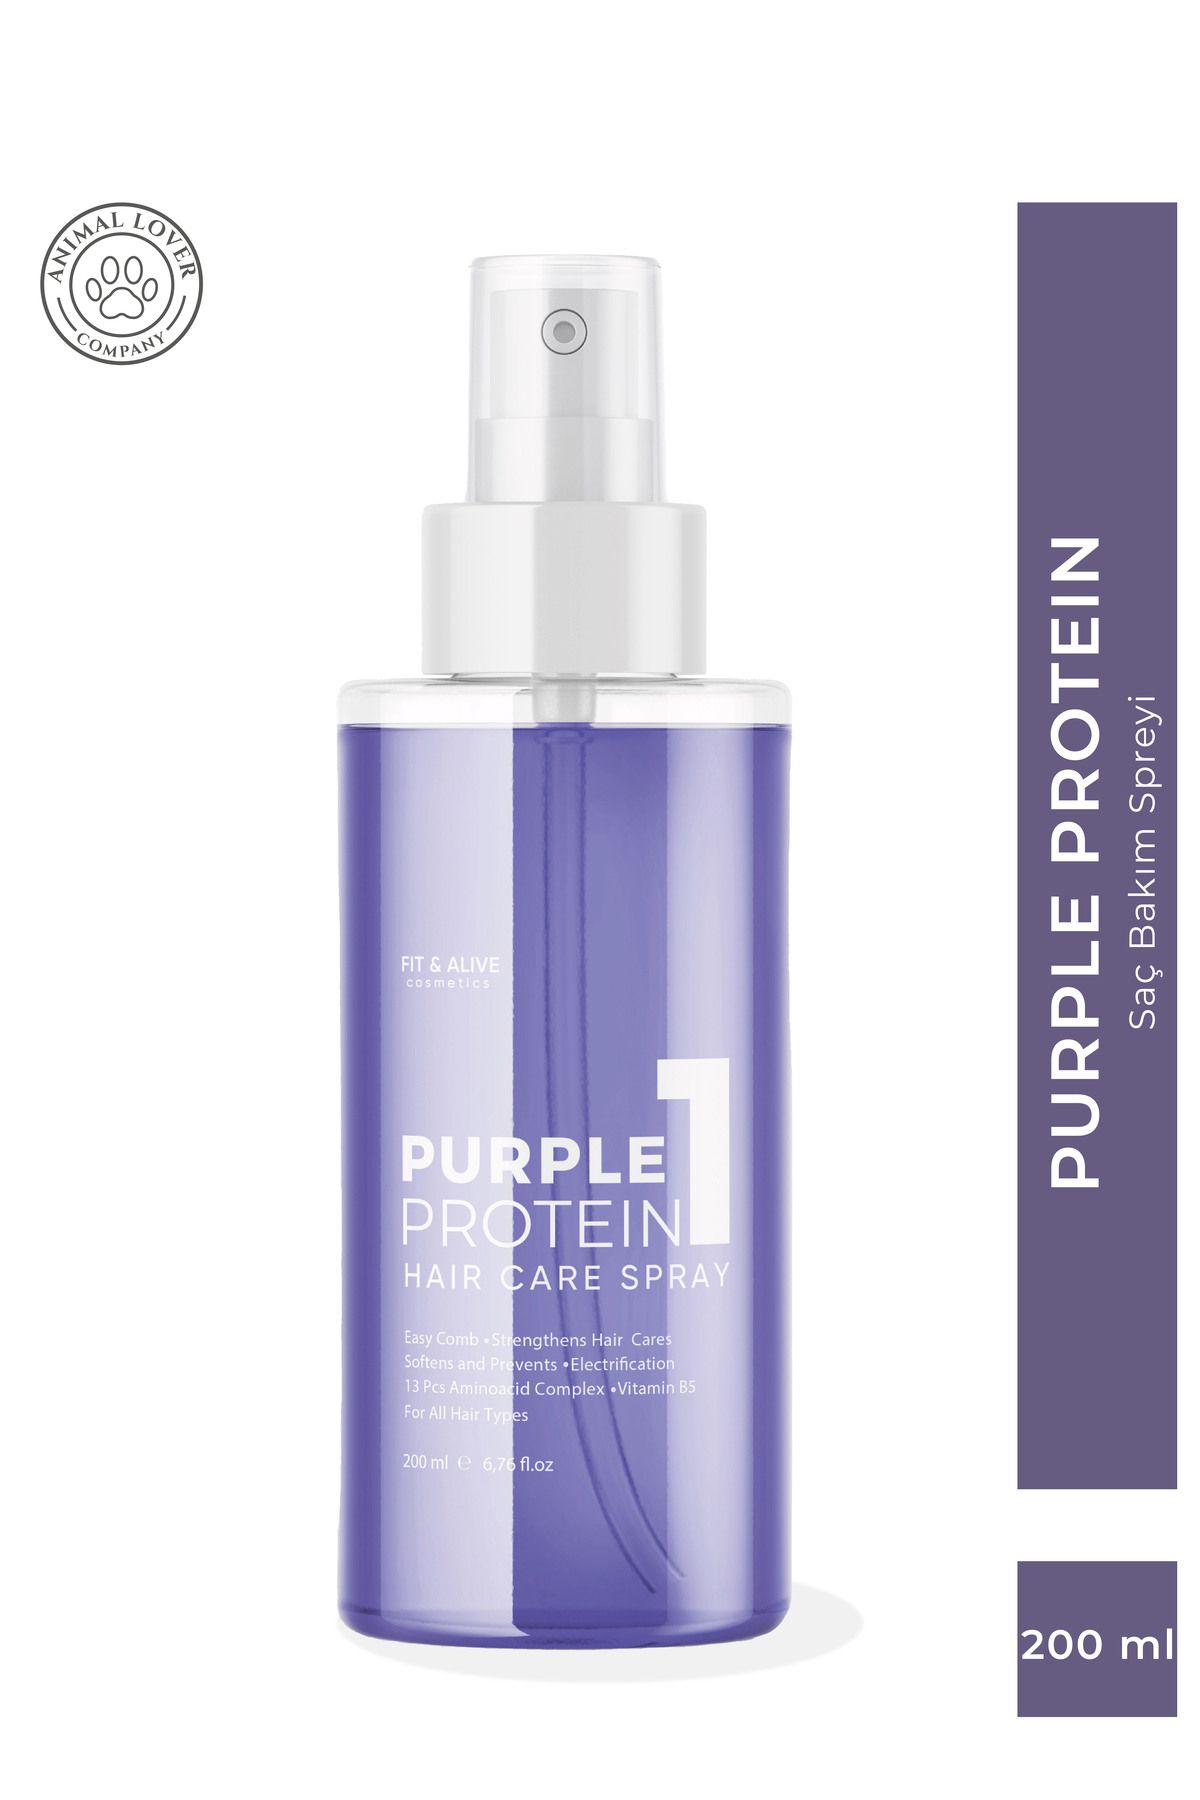 Fit & Alive Purple Protein Spray